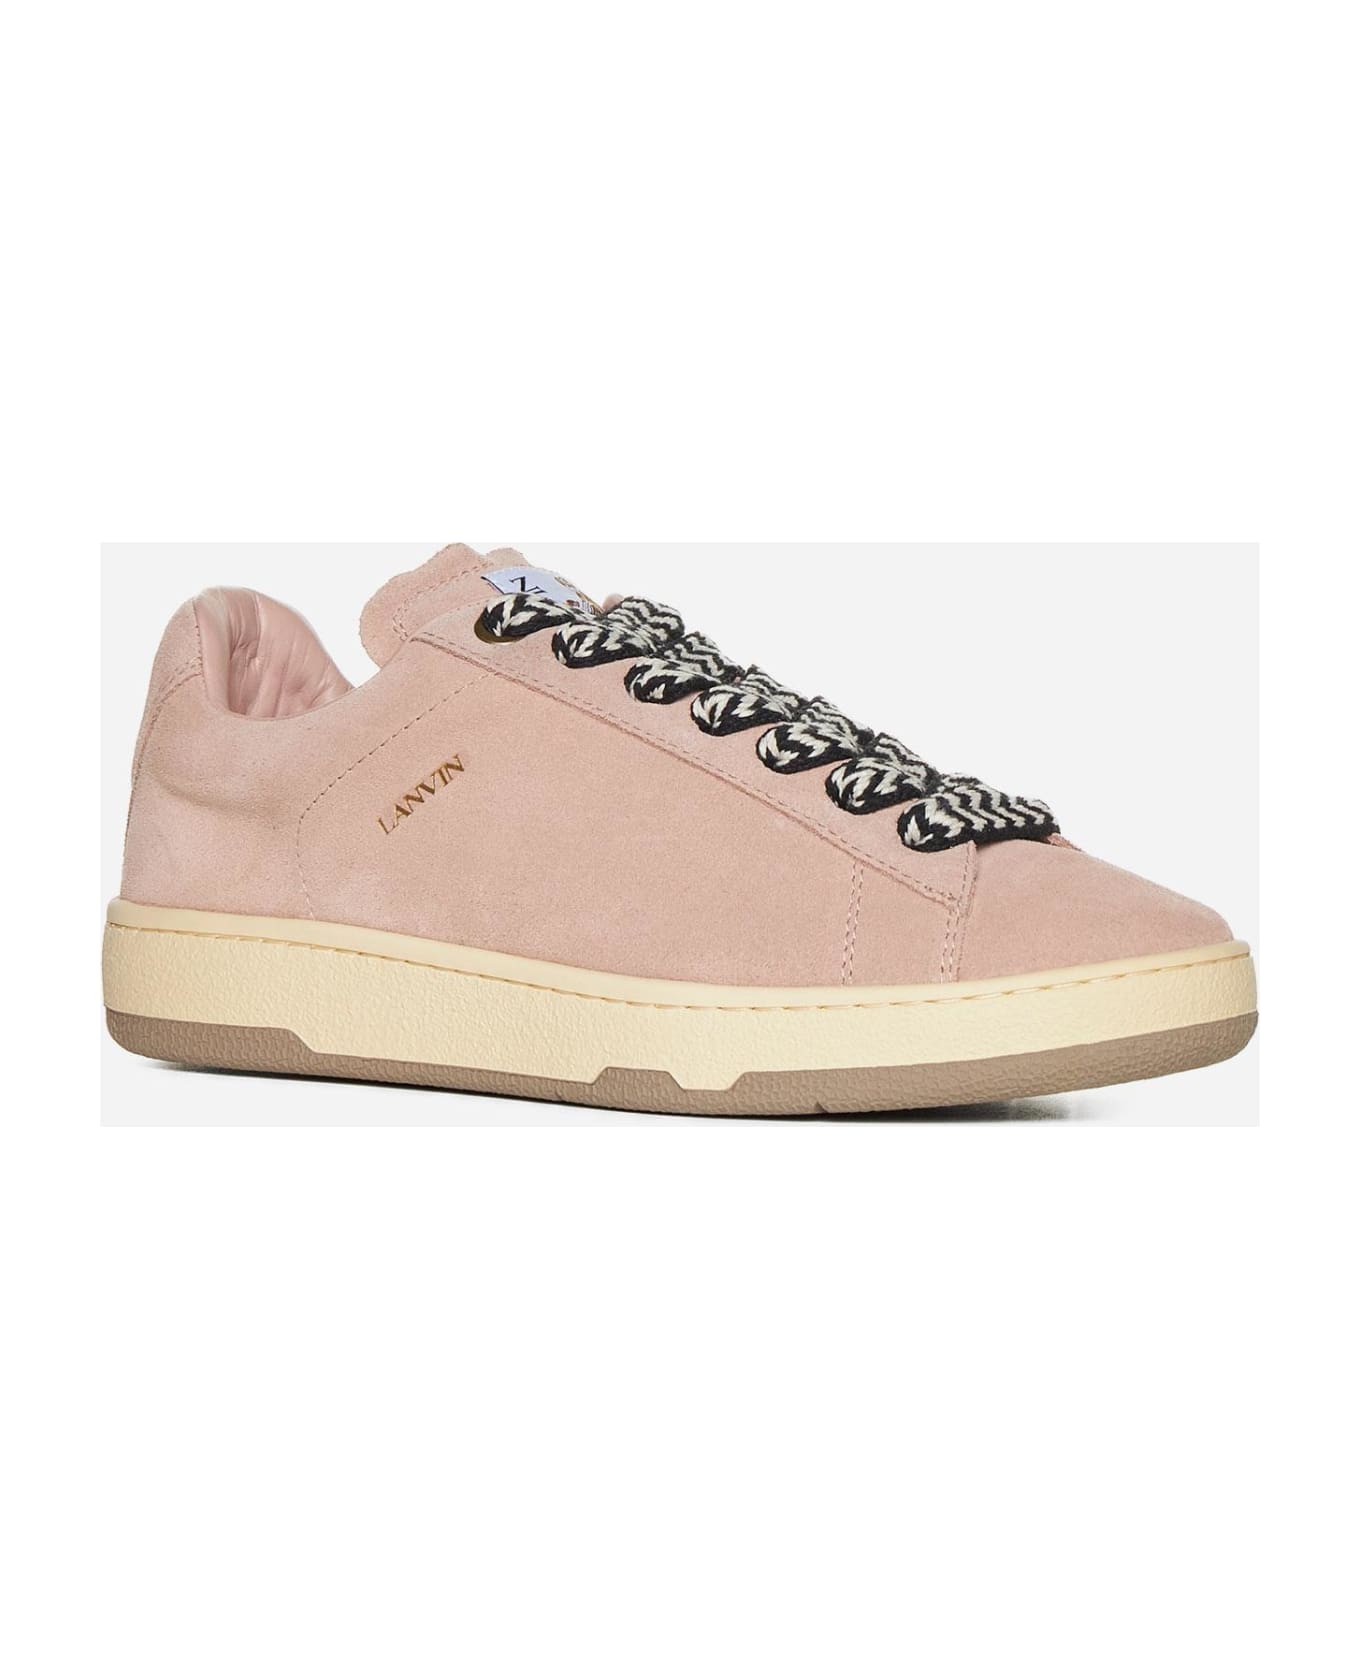 Lanvin Lite Curb Low-top Suede Sneakers - Pale Pink